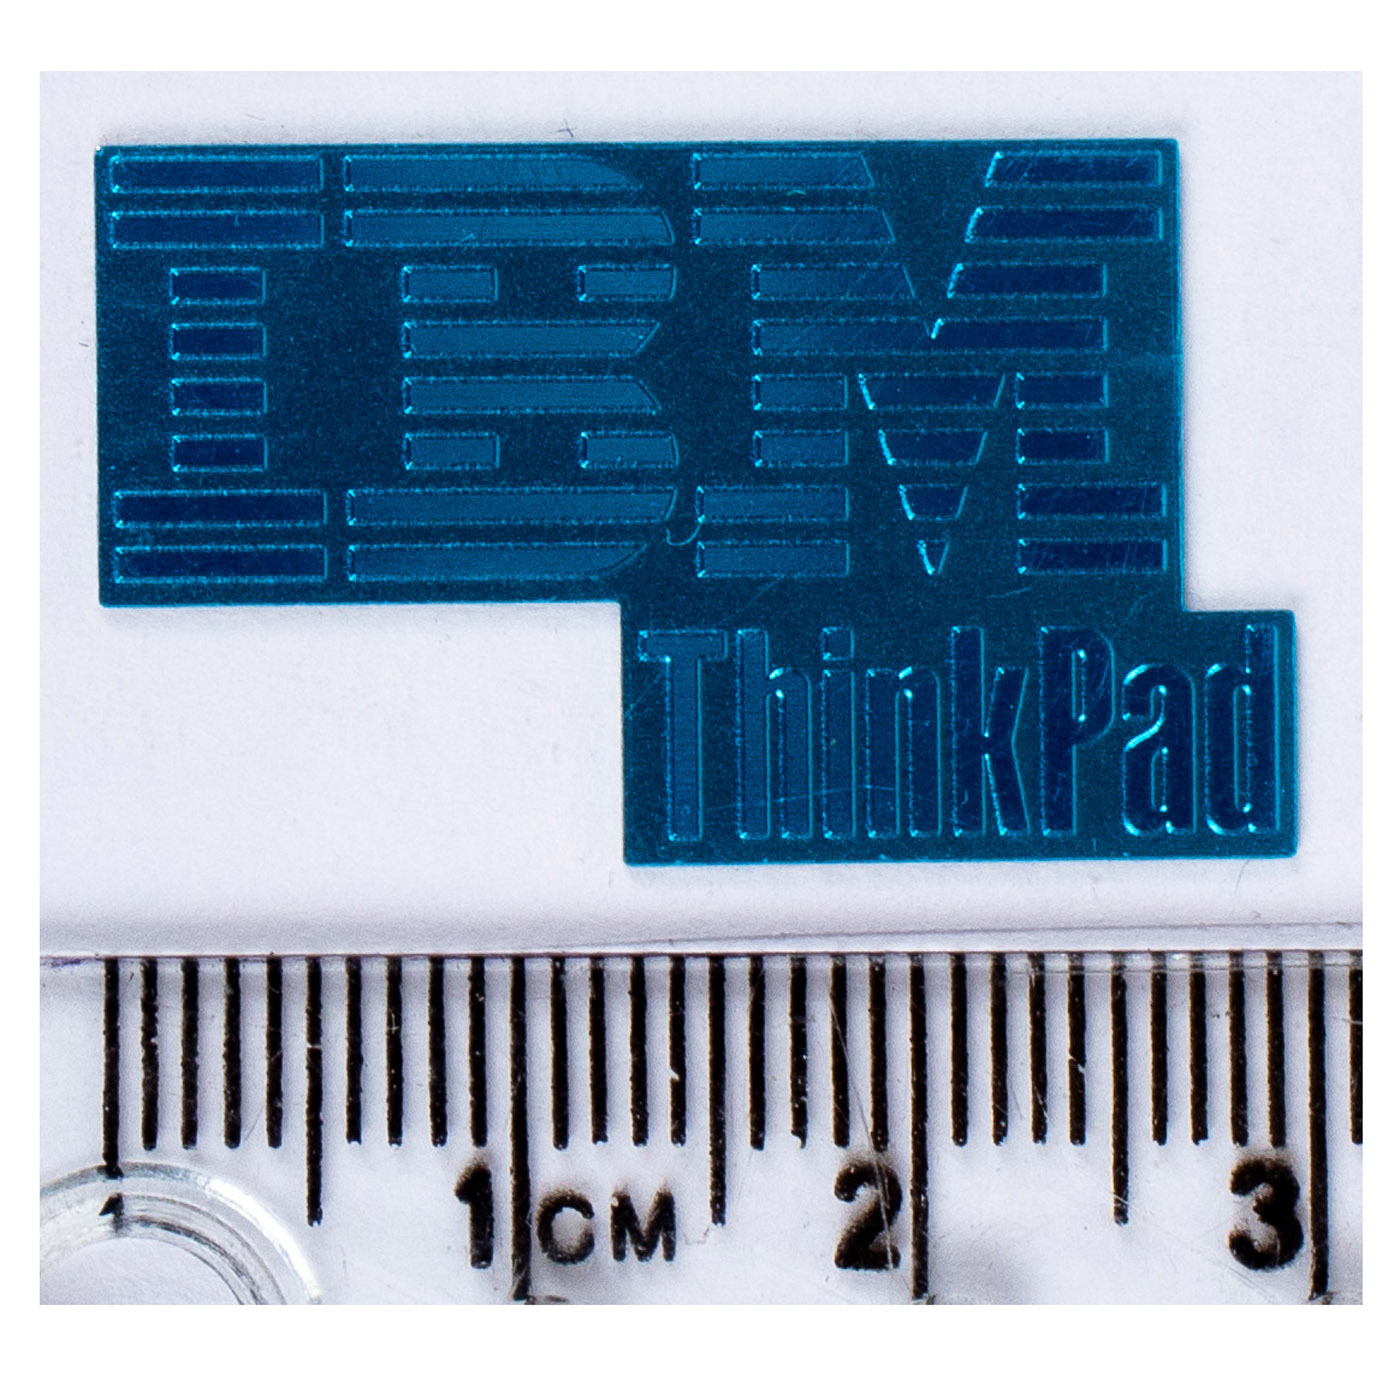 Naklejka IBM ThinkPad blue 18 x 30 mm